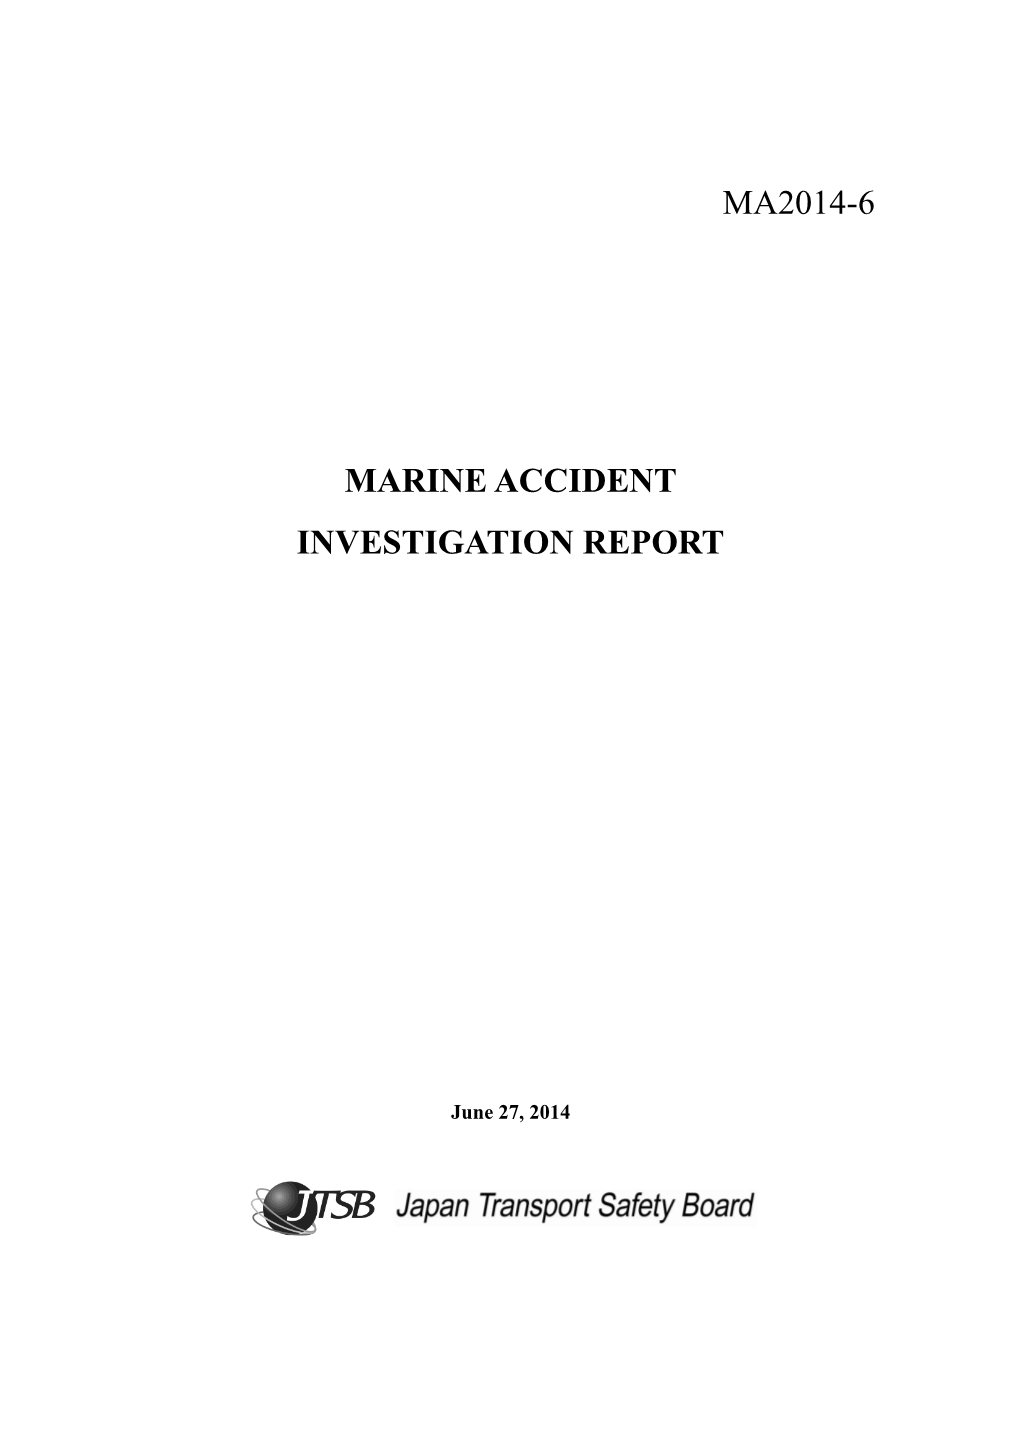 Ma2014-6 Marine Accident Investigation Report